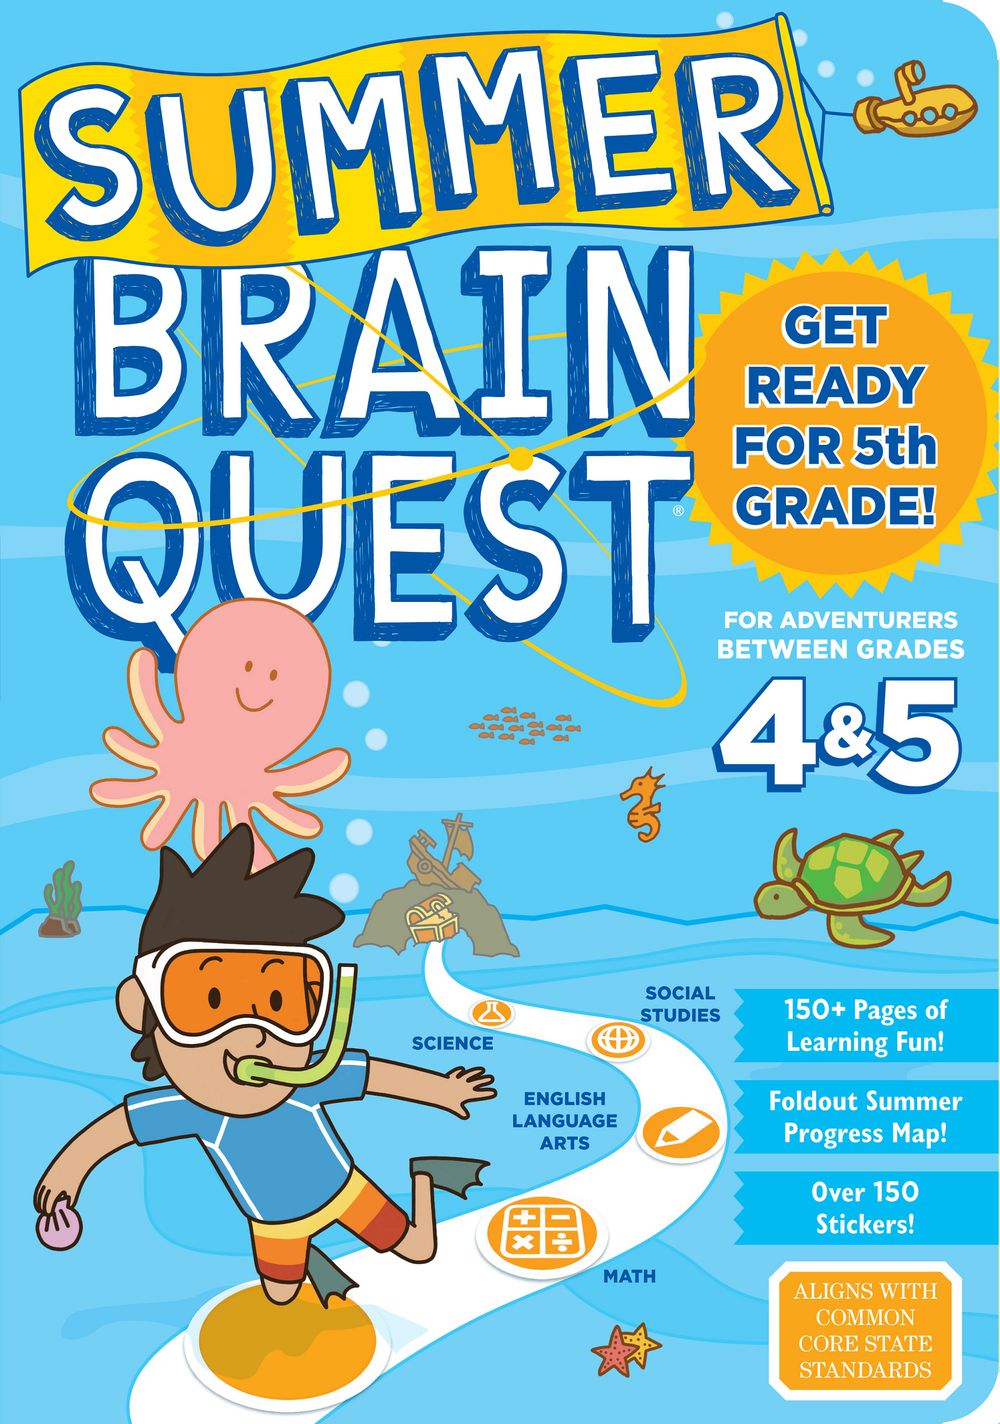 Summer Brain Quest－Between Grades 4 & 5